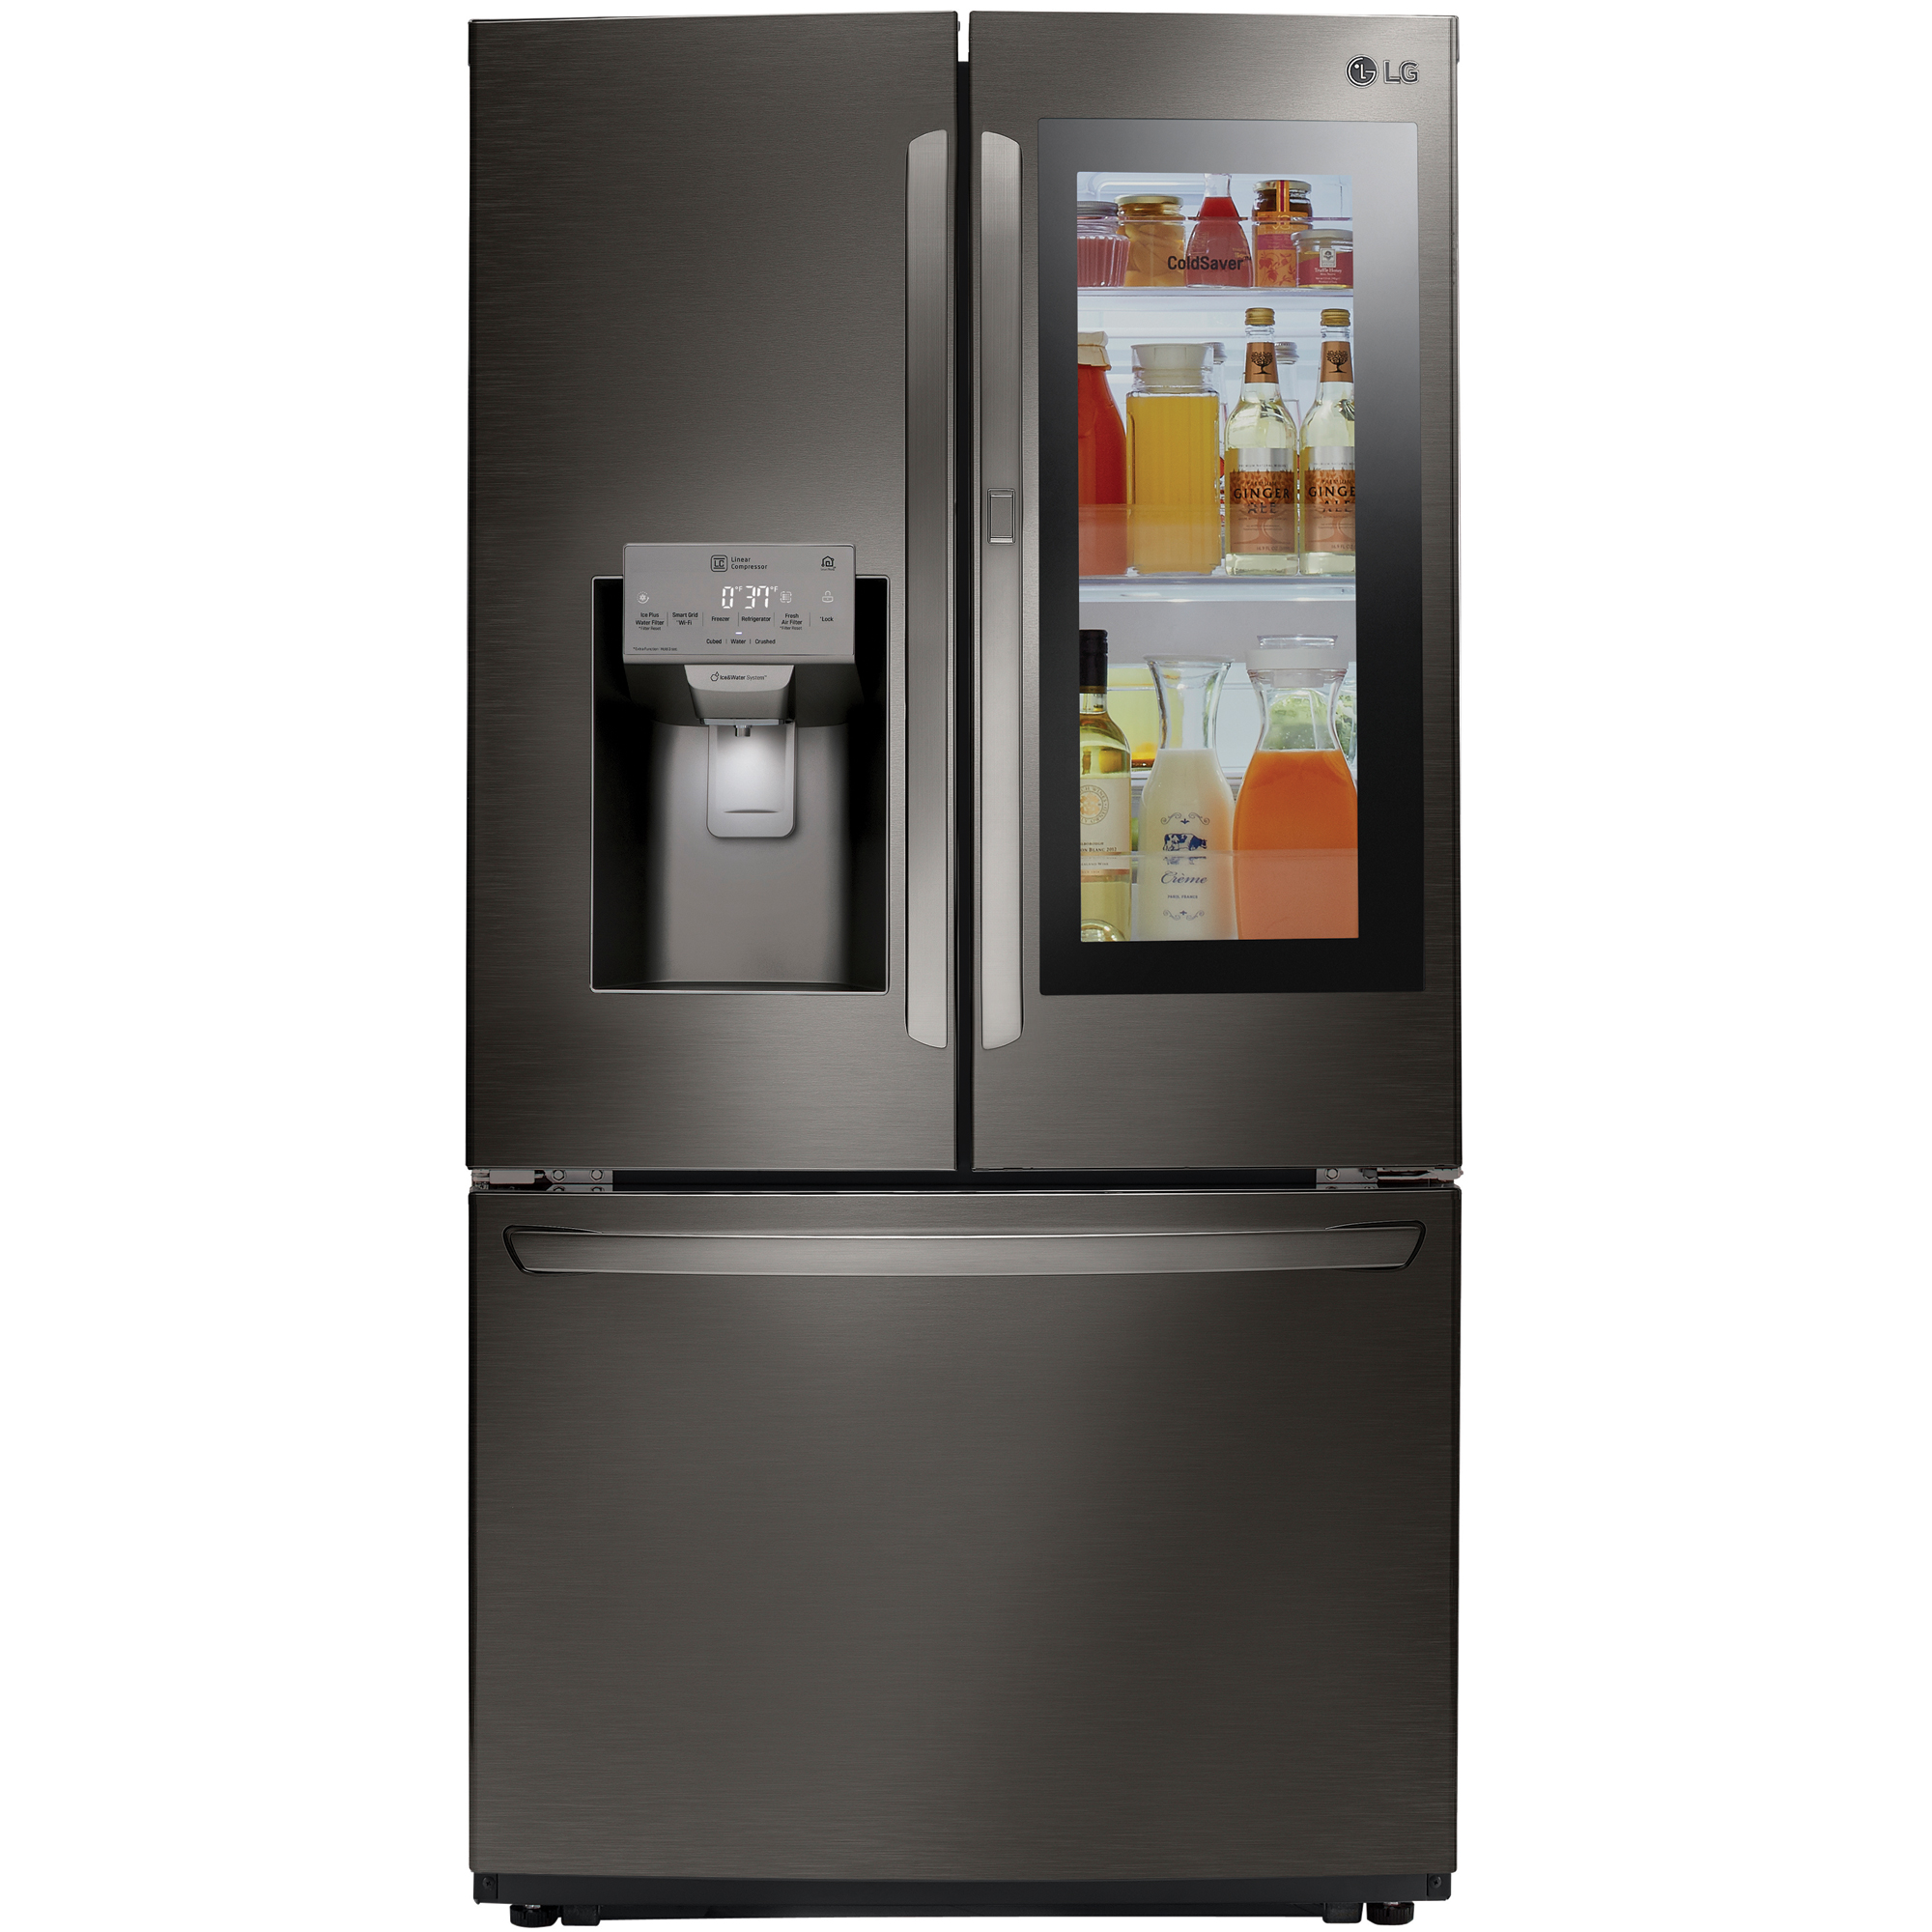 LG LFXS26596D Smart French Door Refrigerator w/InstaView- 26.1 cu. ft - Black